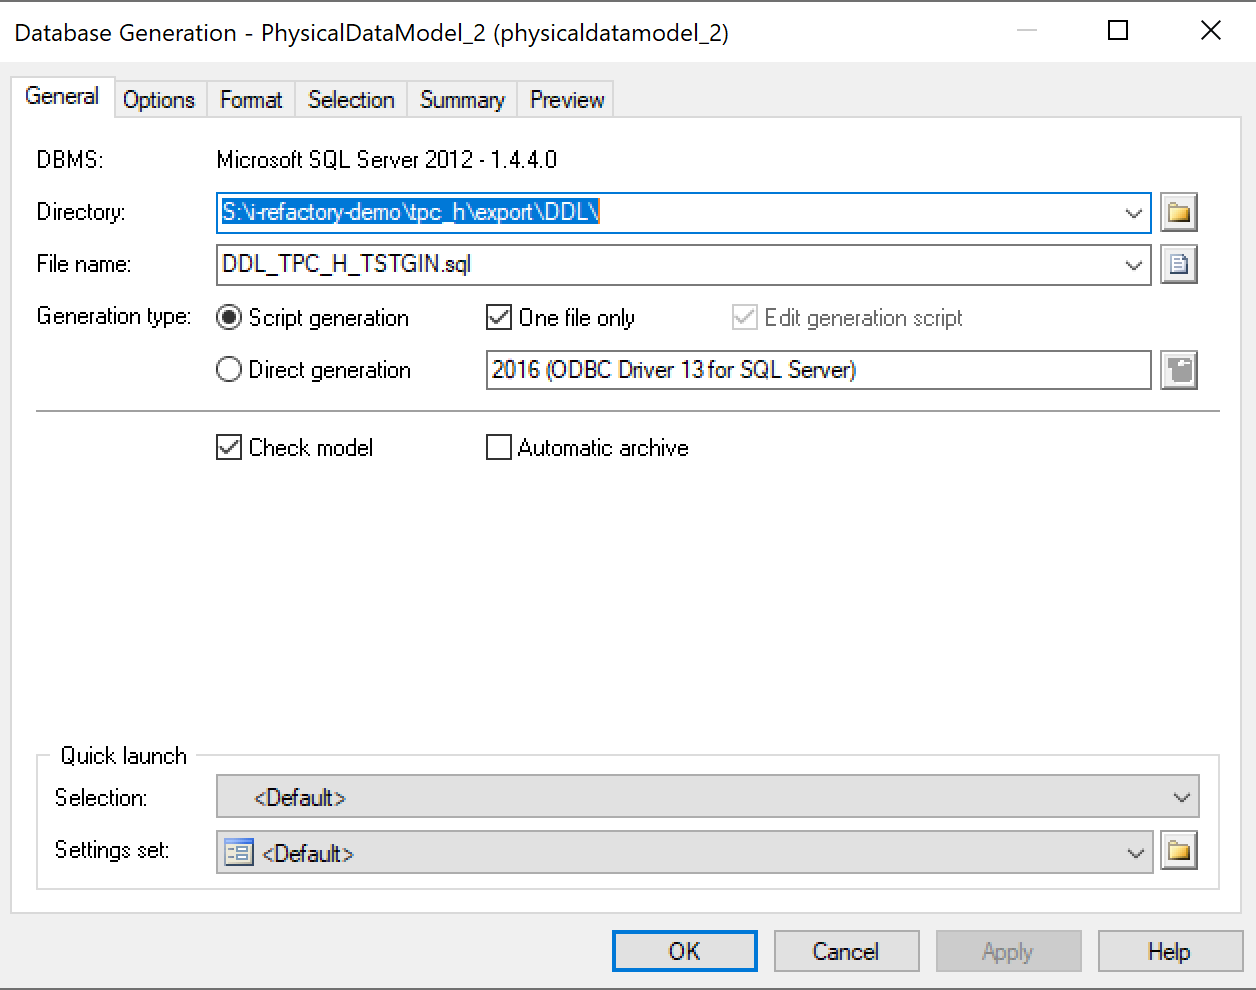 Configure PowerDesigner settings set dialog